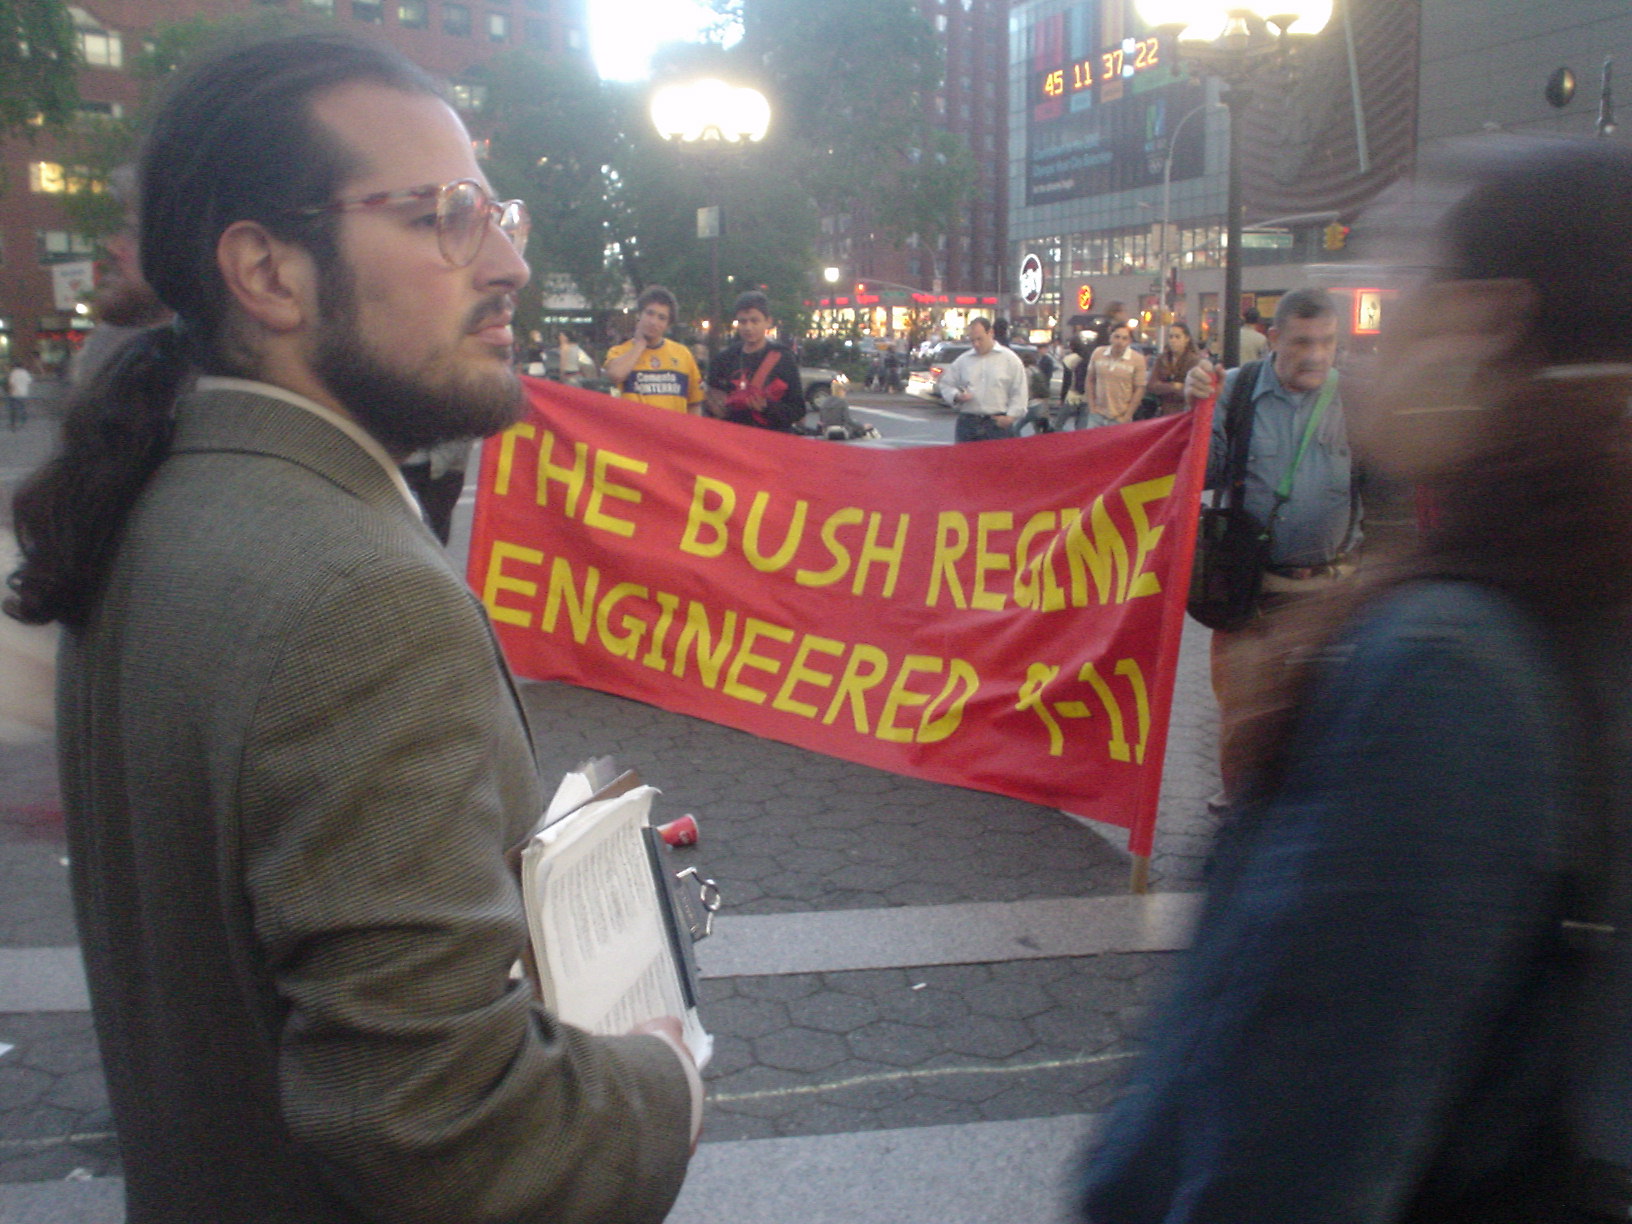 Jason Blank with BOSH REGIME ENGINEERED 9-11 banner